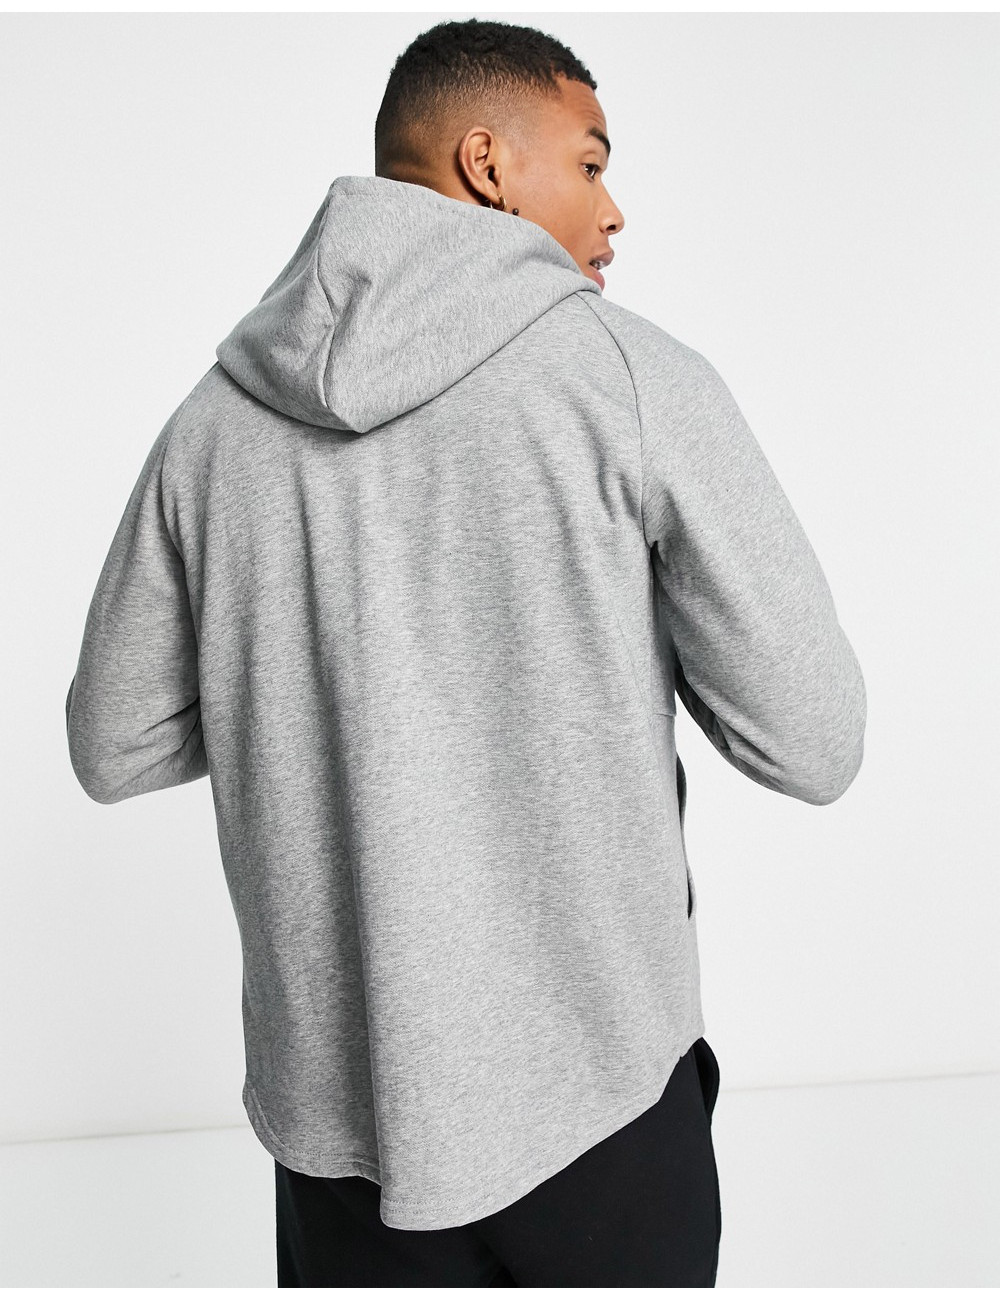 Pumma Full Zip hoodie in grey